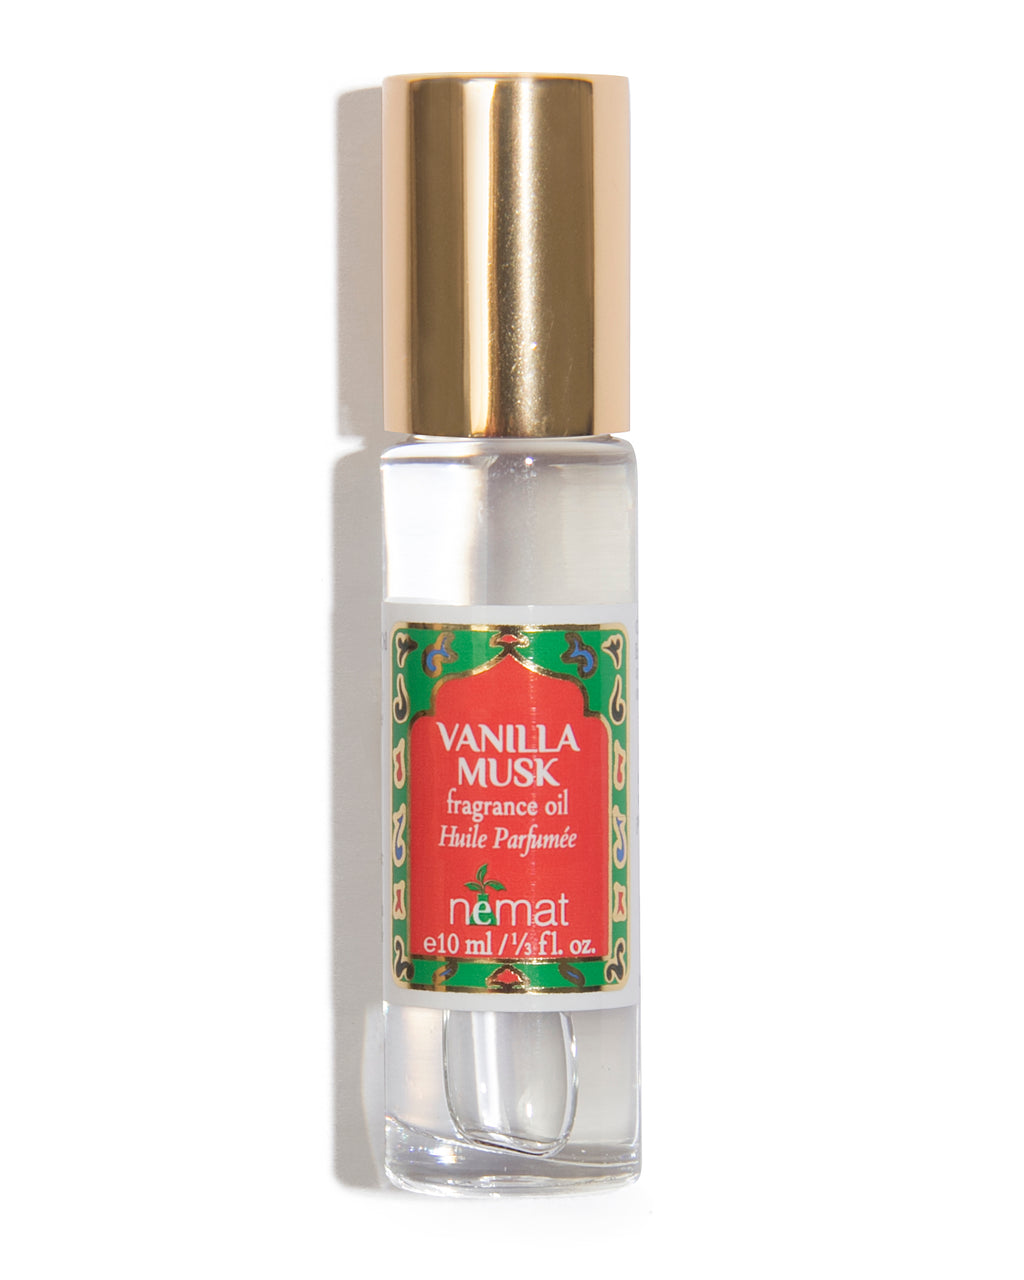  UVUBXT Vanilla Musk Perfume Oil - Roll-On Applicator 5ml :  Health & Household